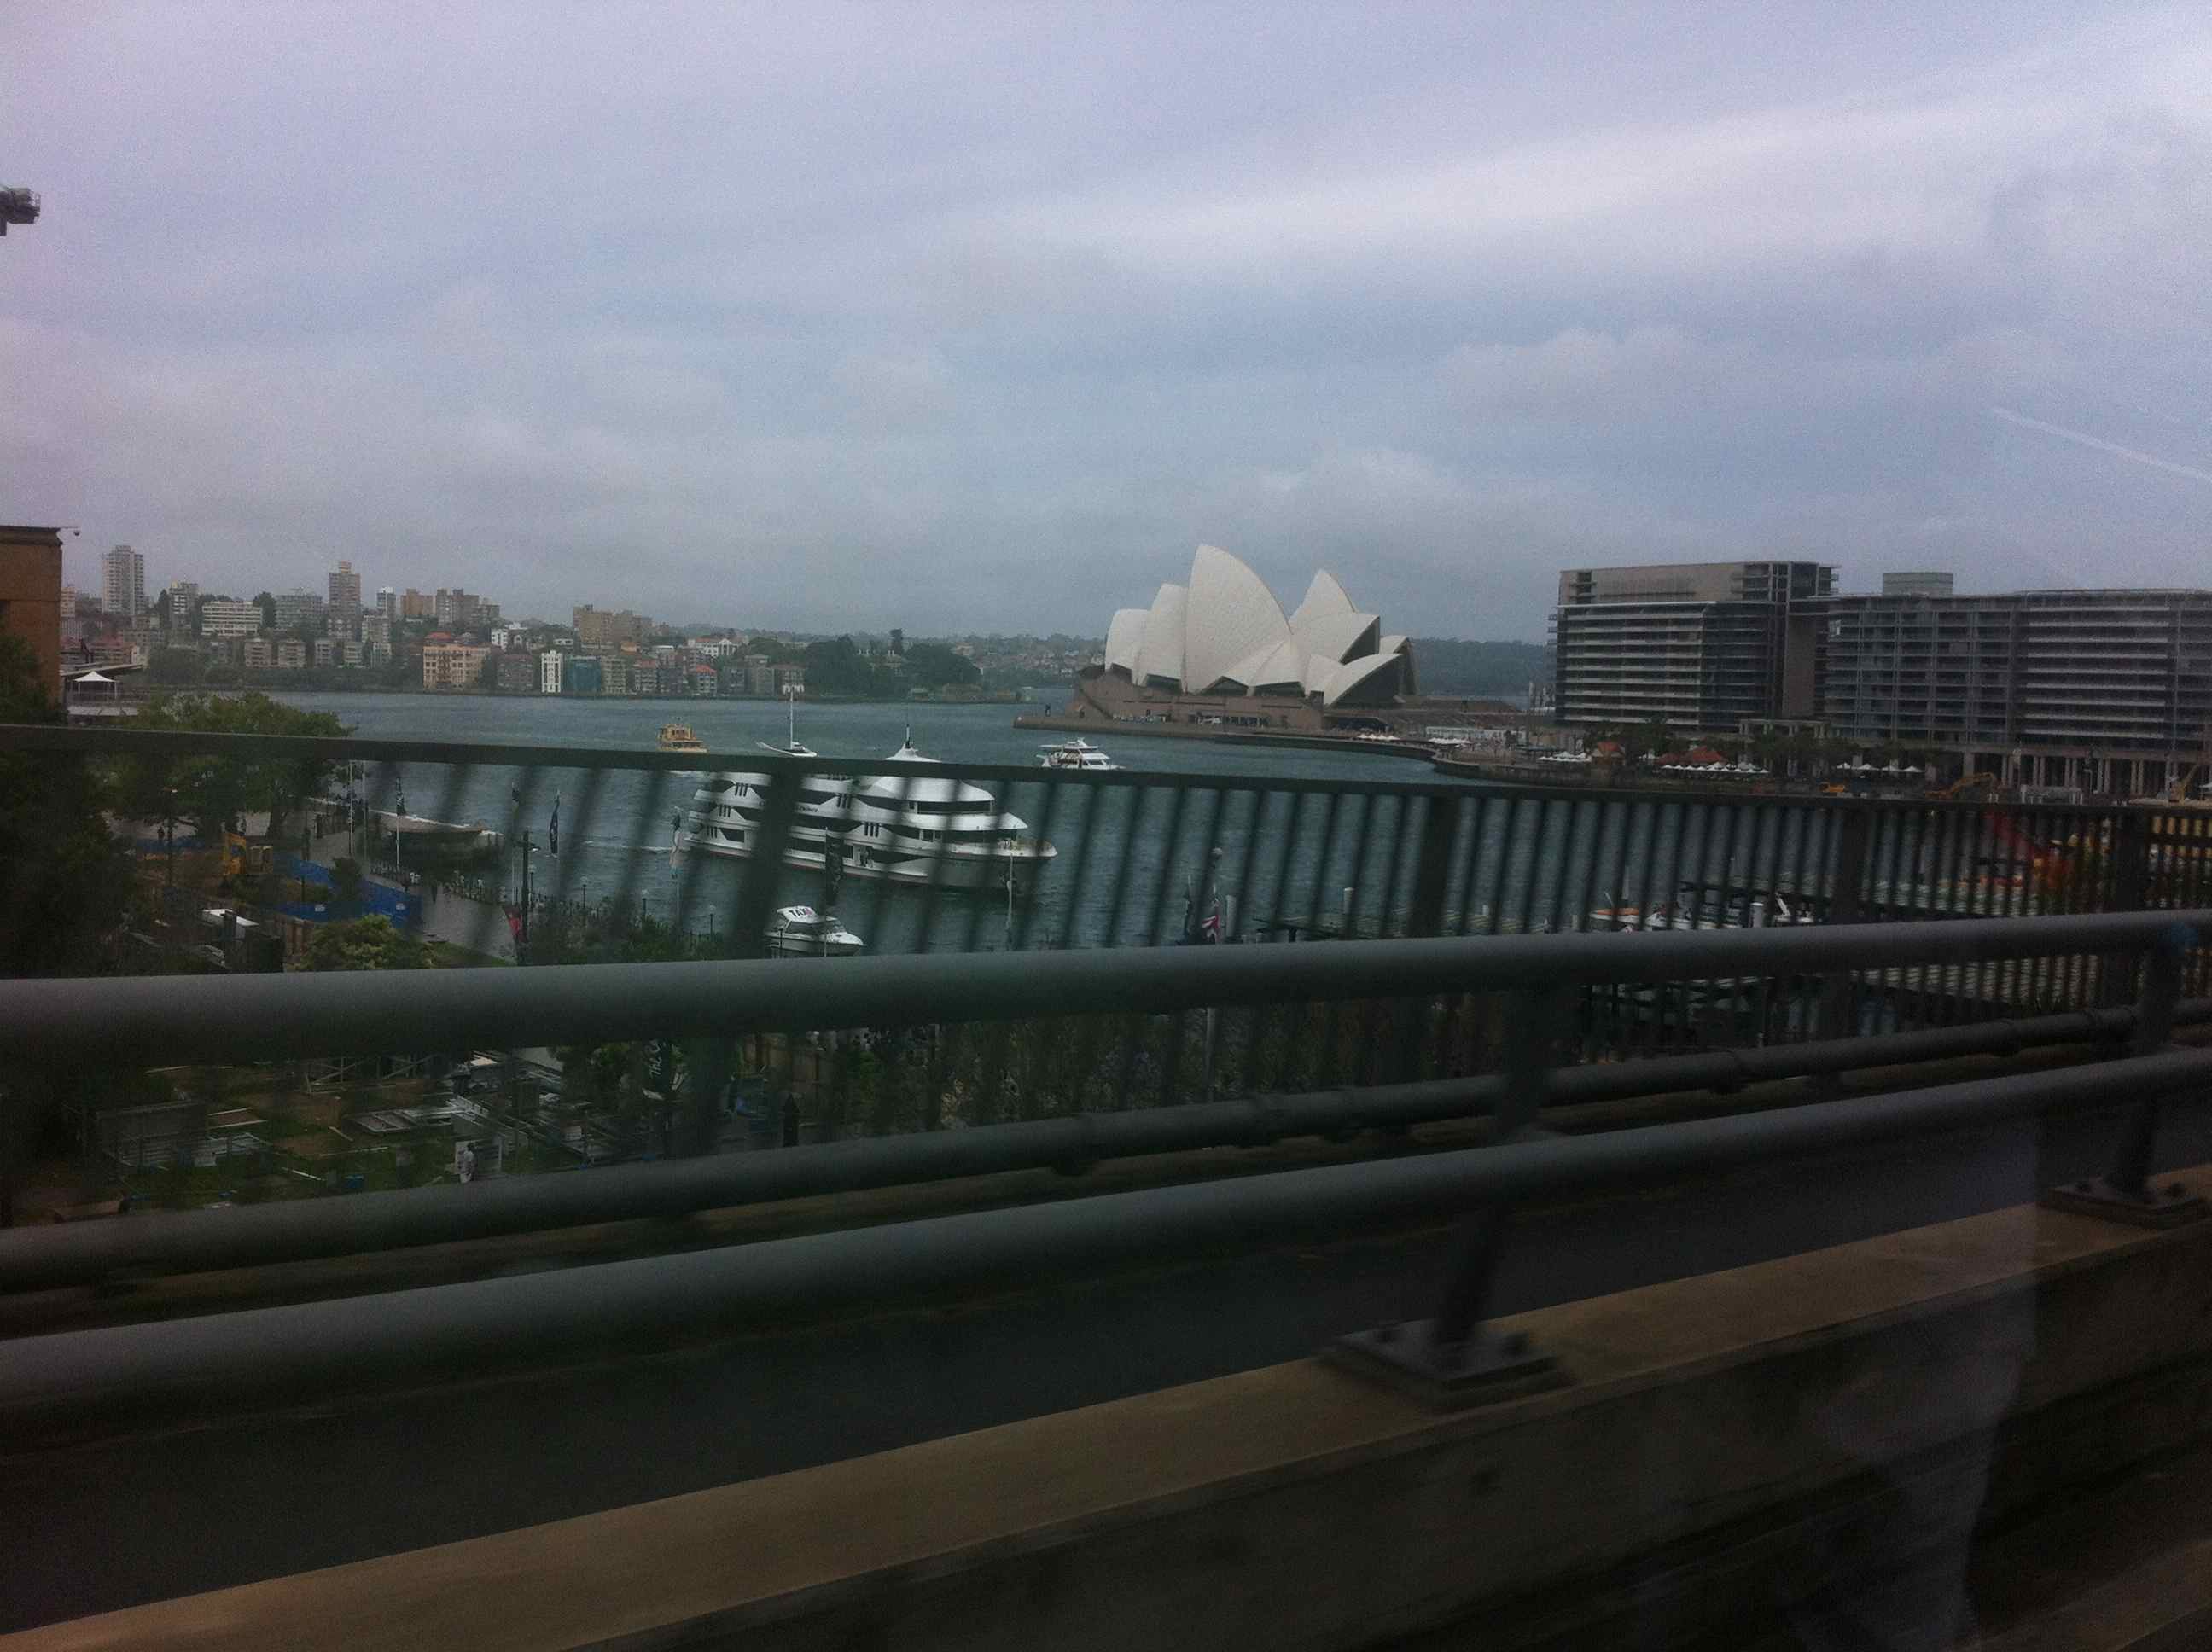 Leaving Sydney